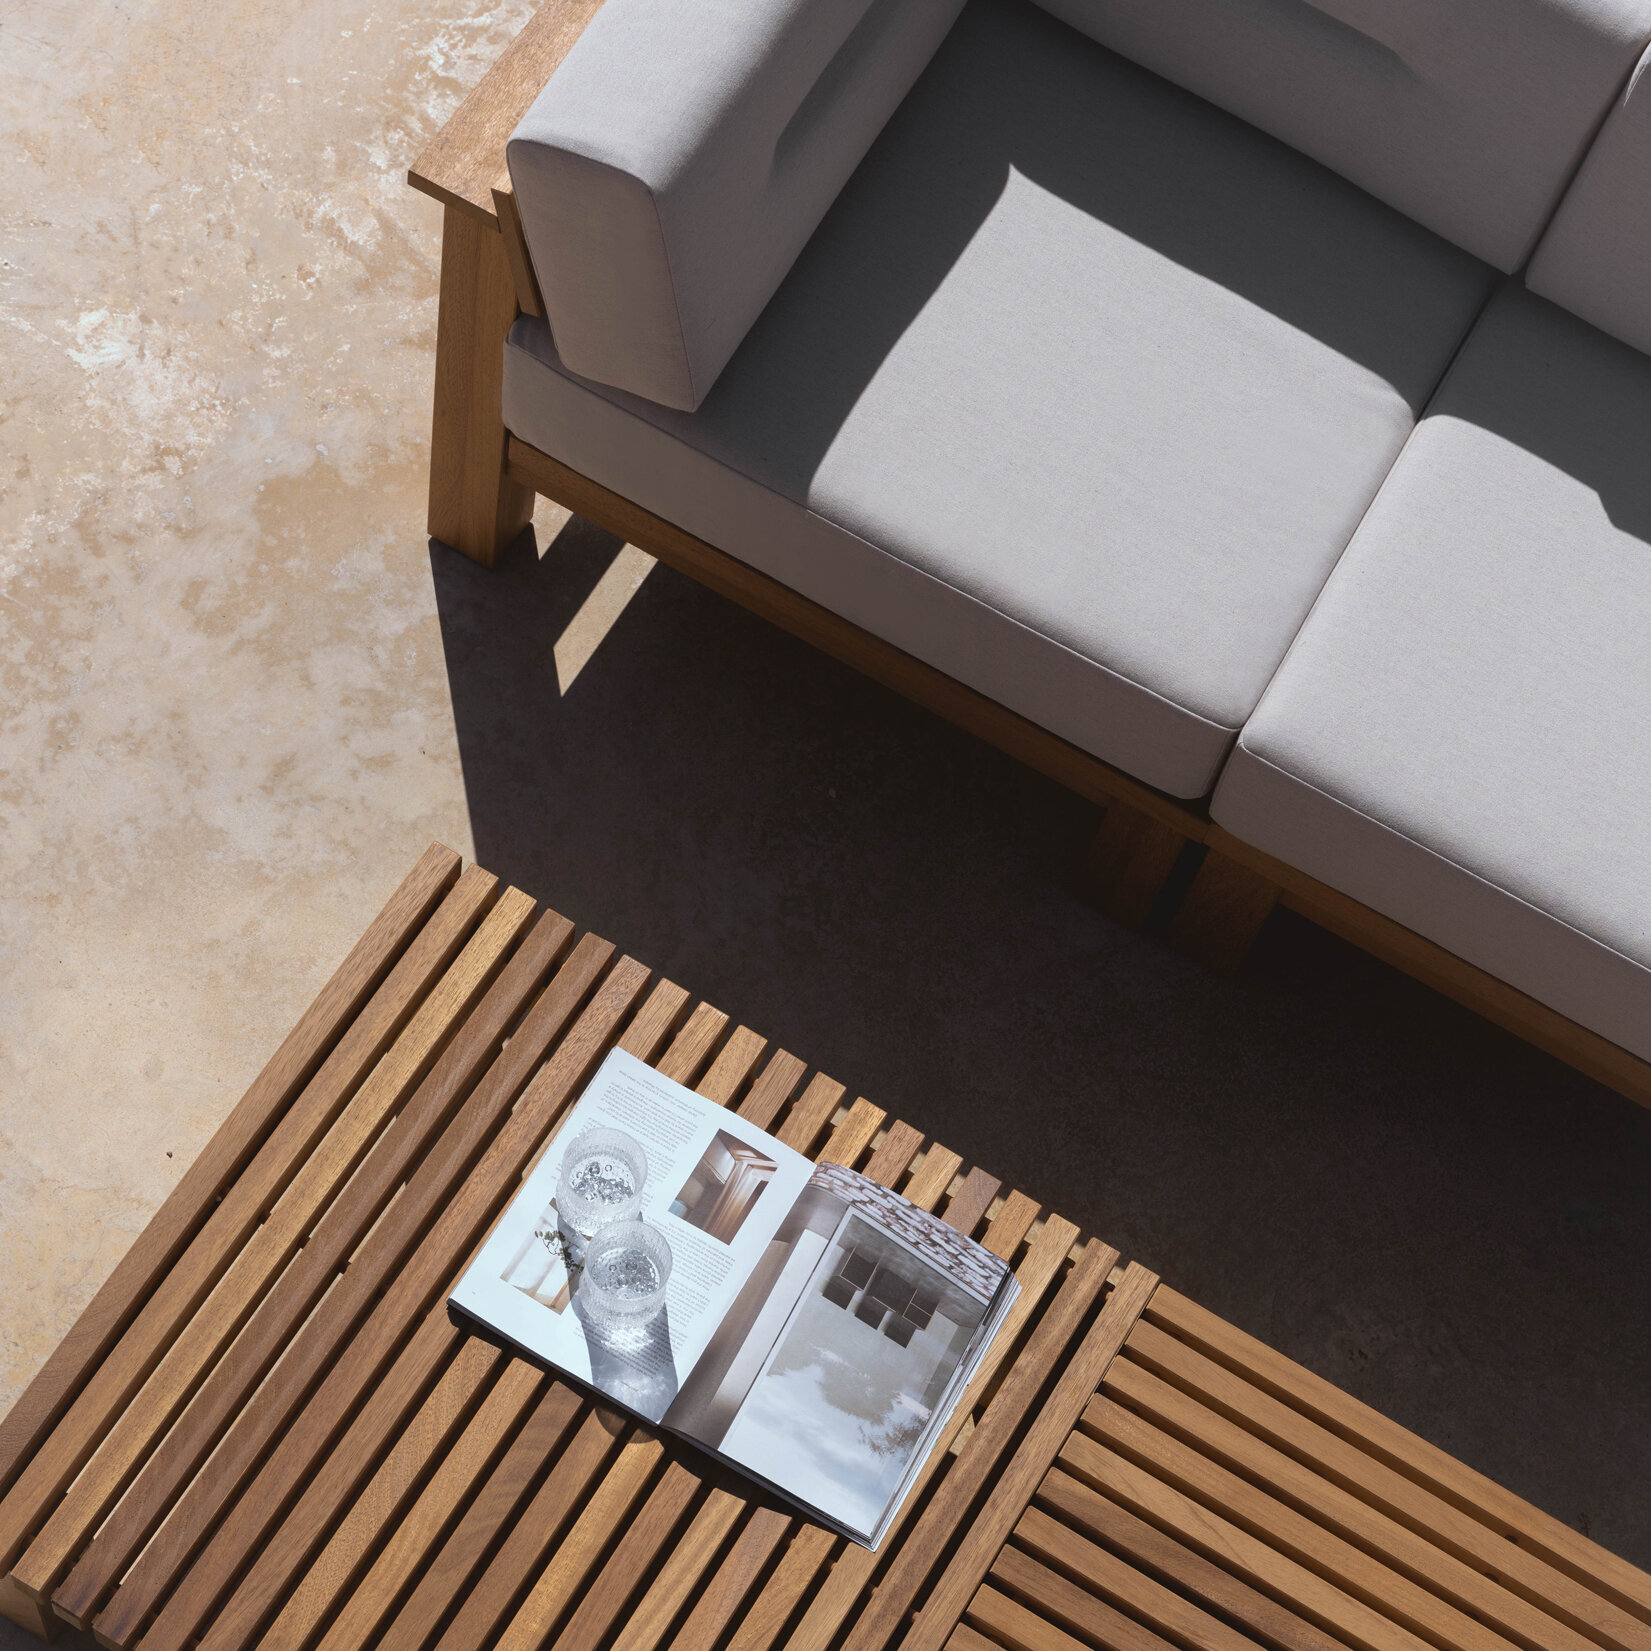 Design modern sofa | Element Lounge Sofa heritage papyrus18006 | Studio HENK| 